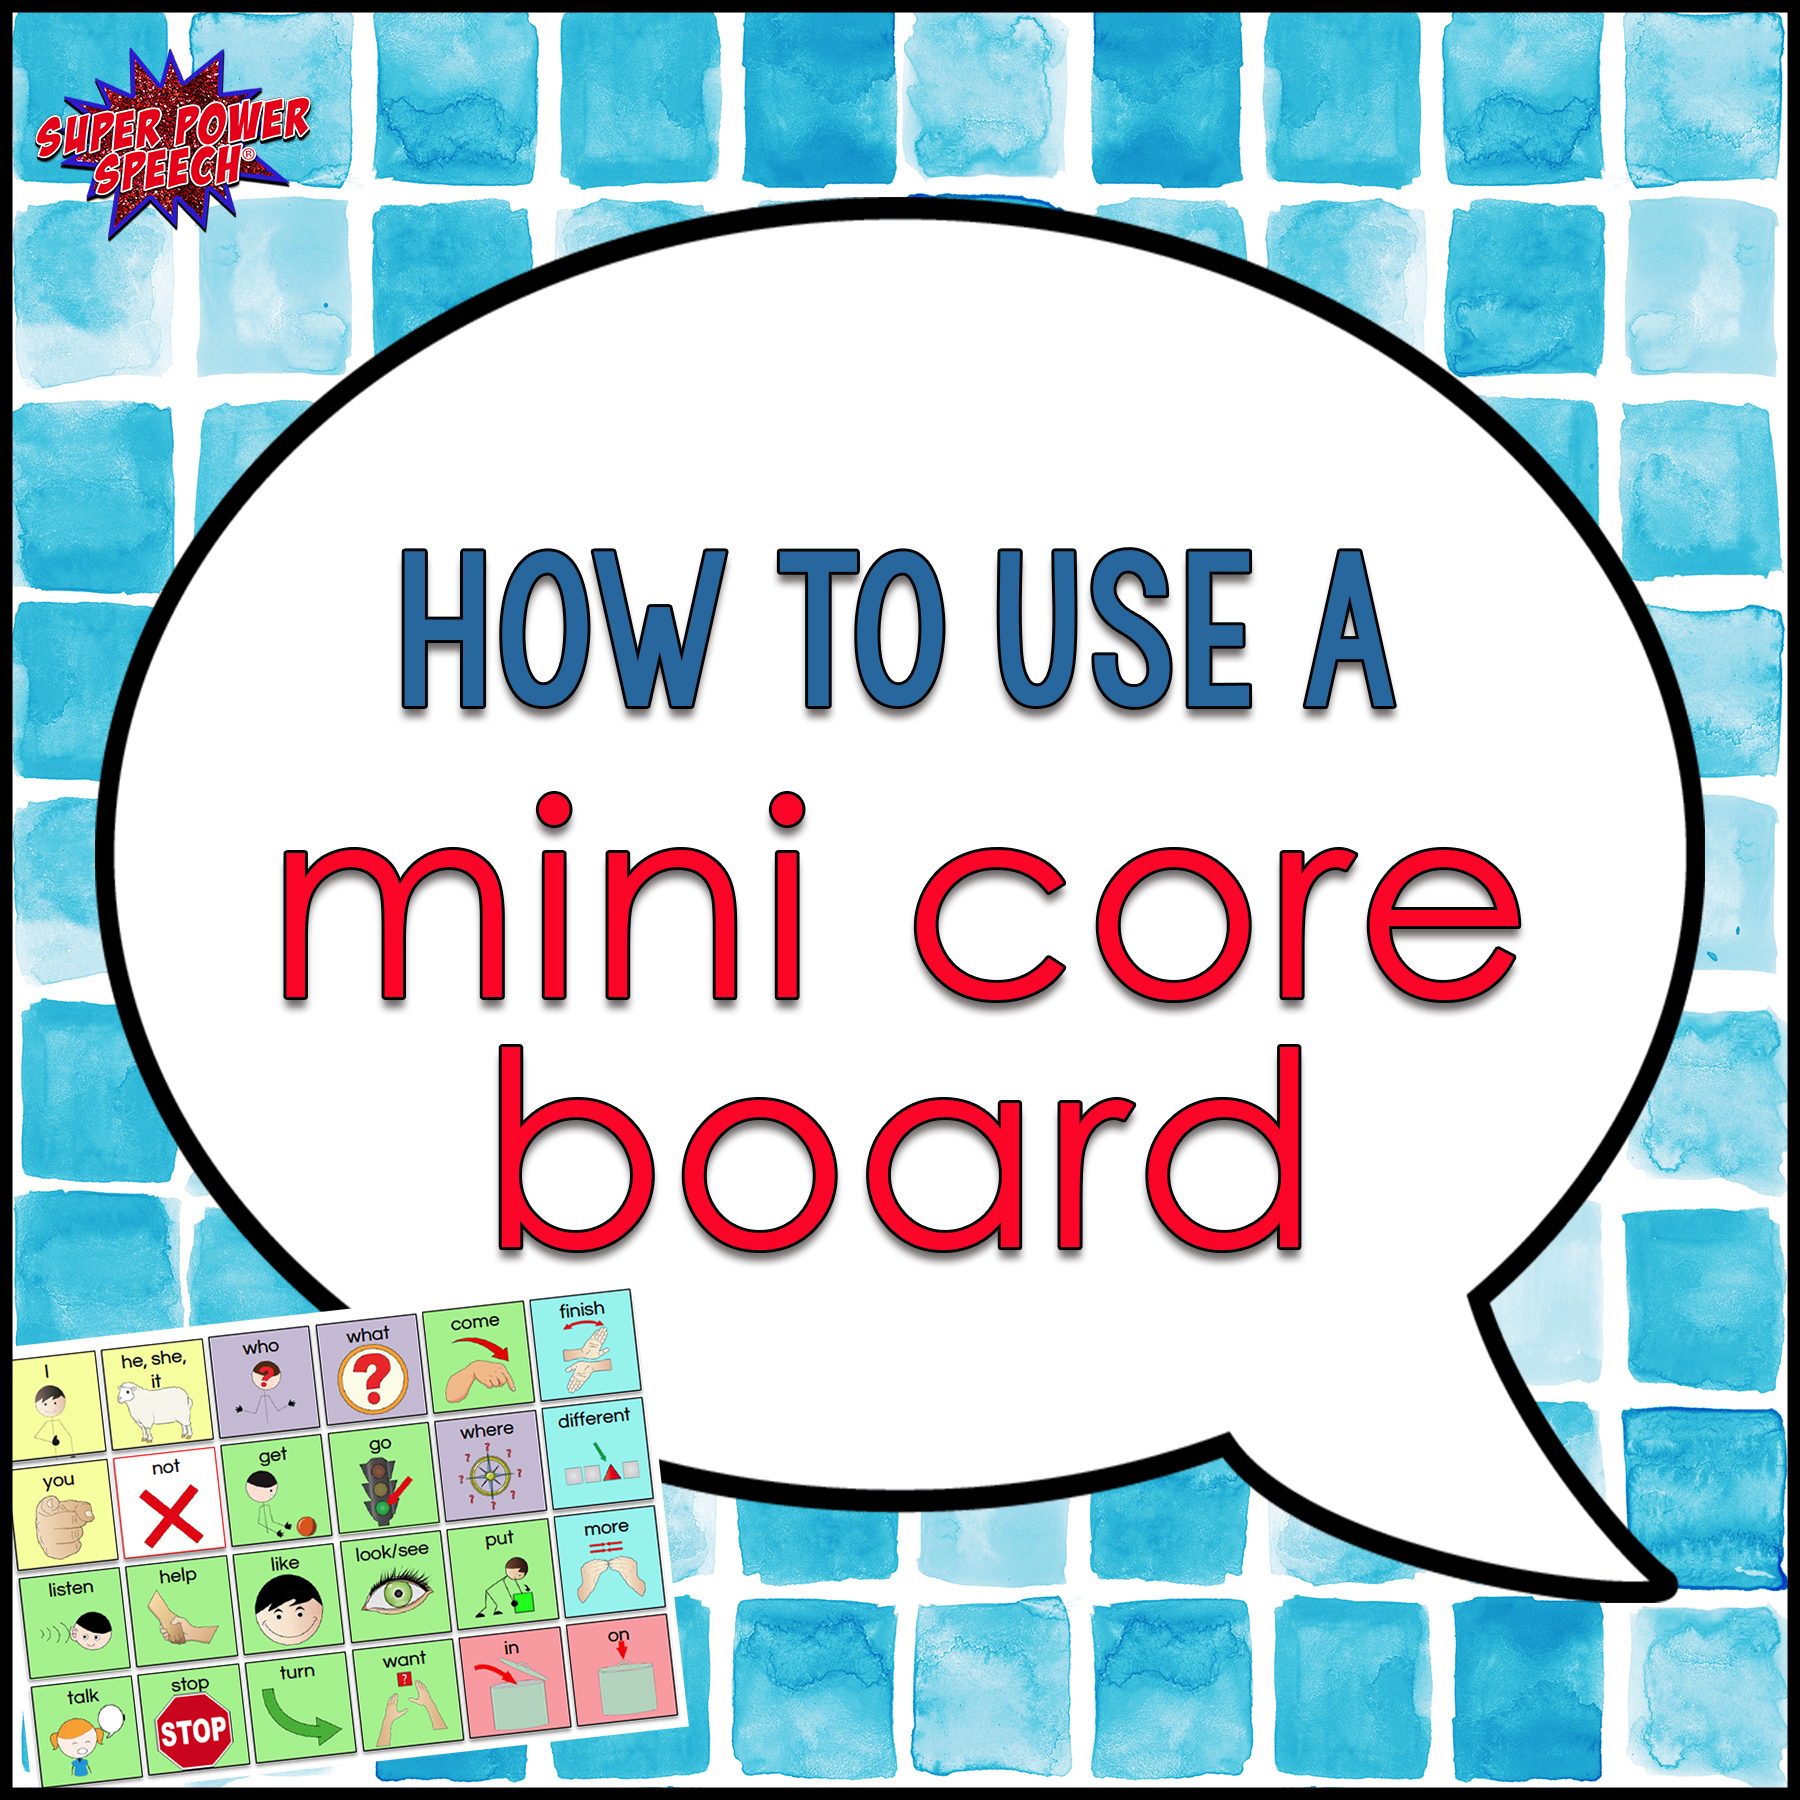 How to use a mini core board